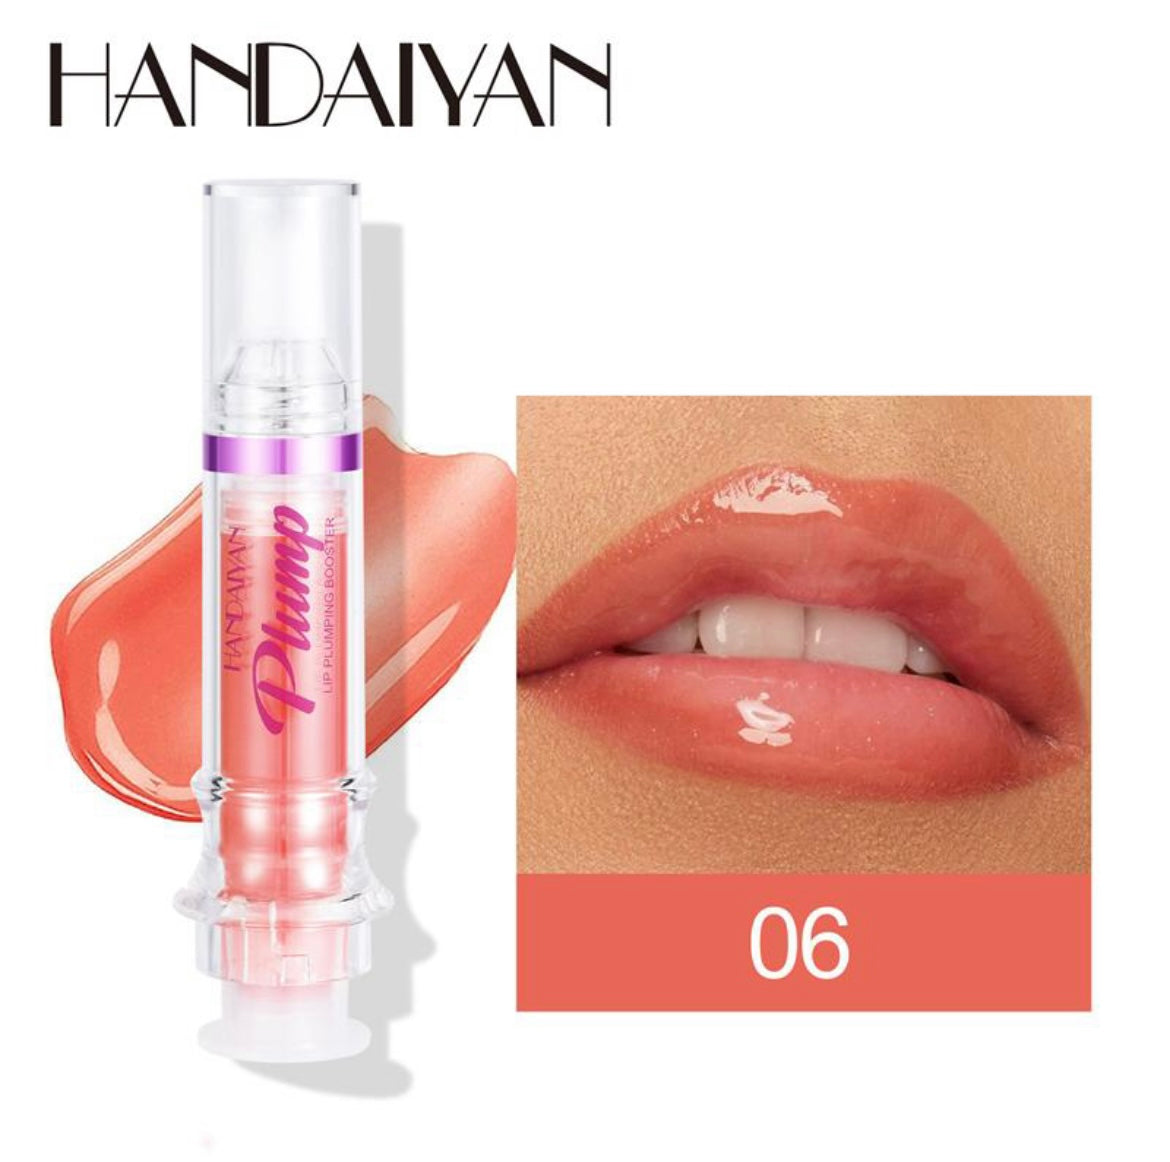 Handaiyan Lip Plumper